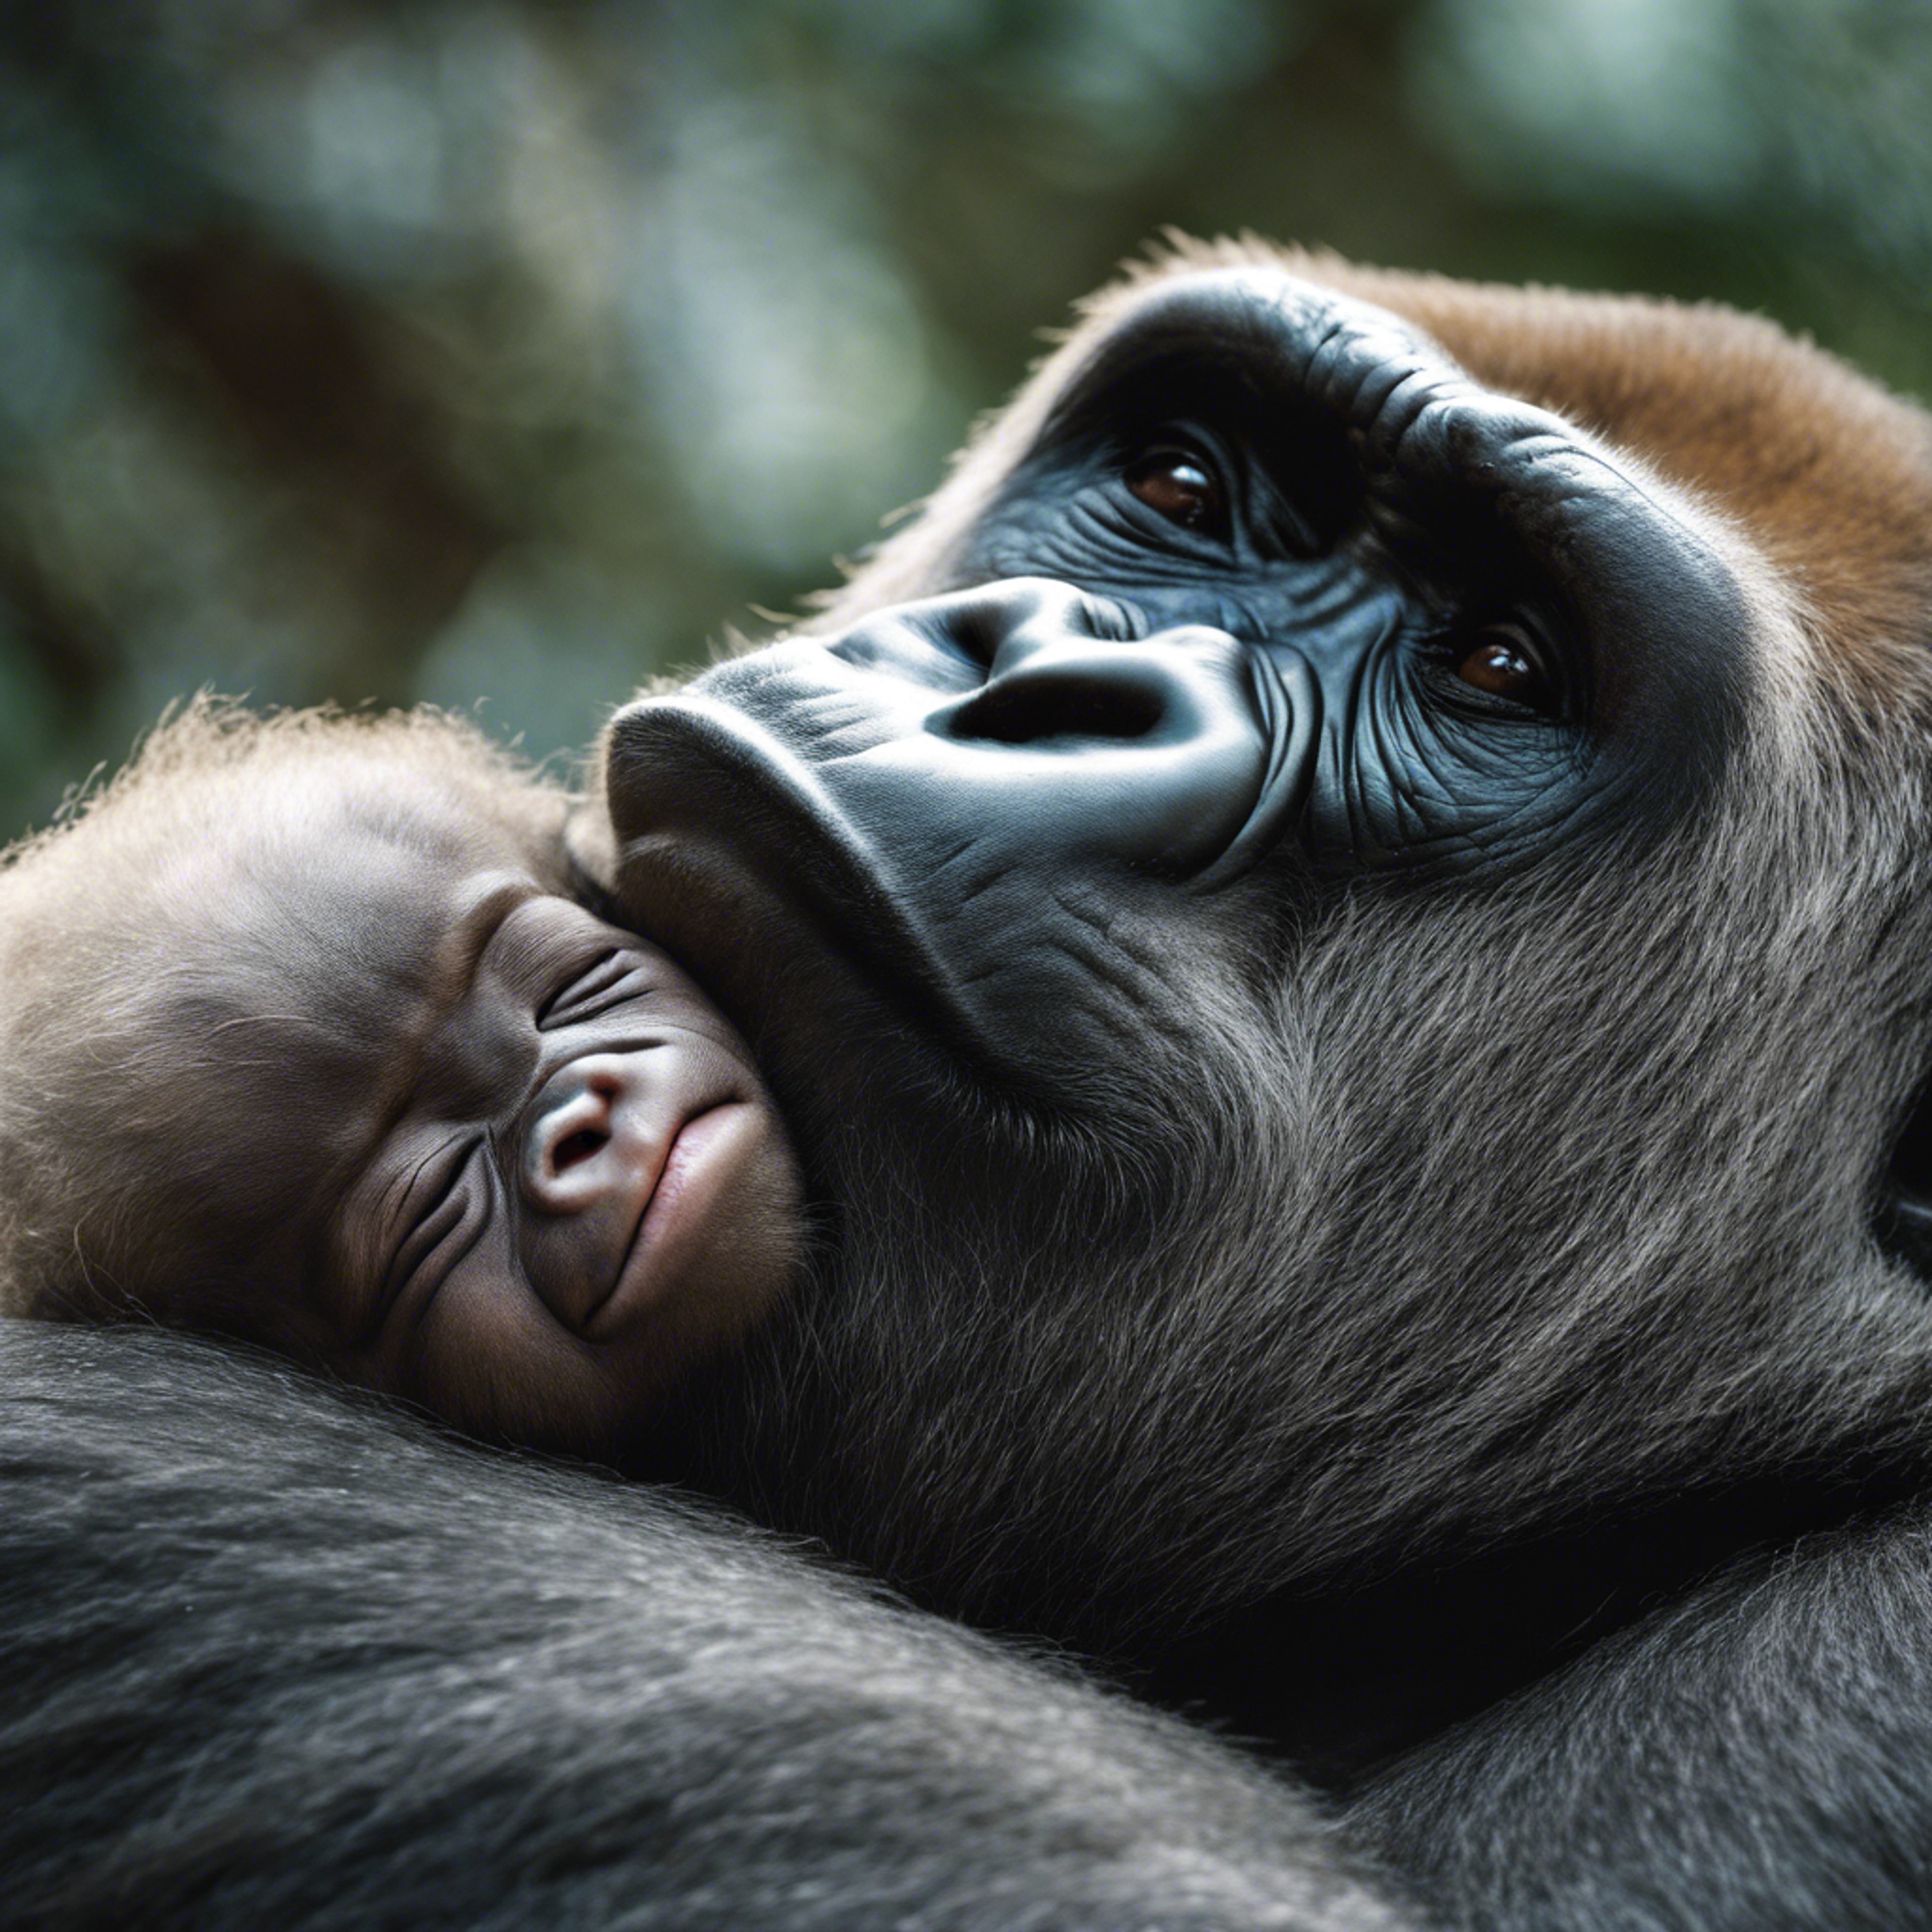 A close-up, emotional study of a gorilla mother's face as she cradles her sleeping newborn. ផ្ទាំង​រូបភាព[516e0f2ed6254482ad03]